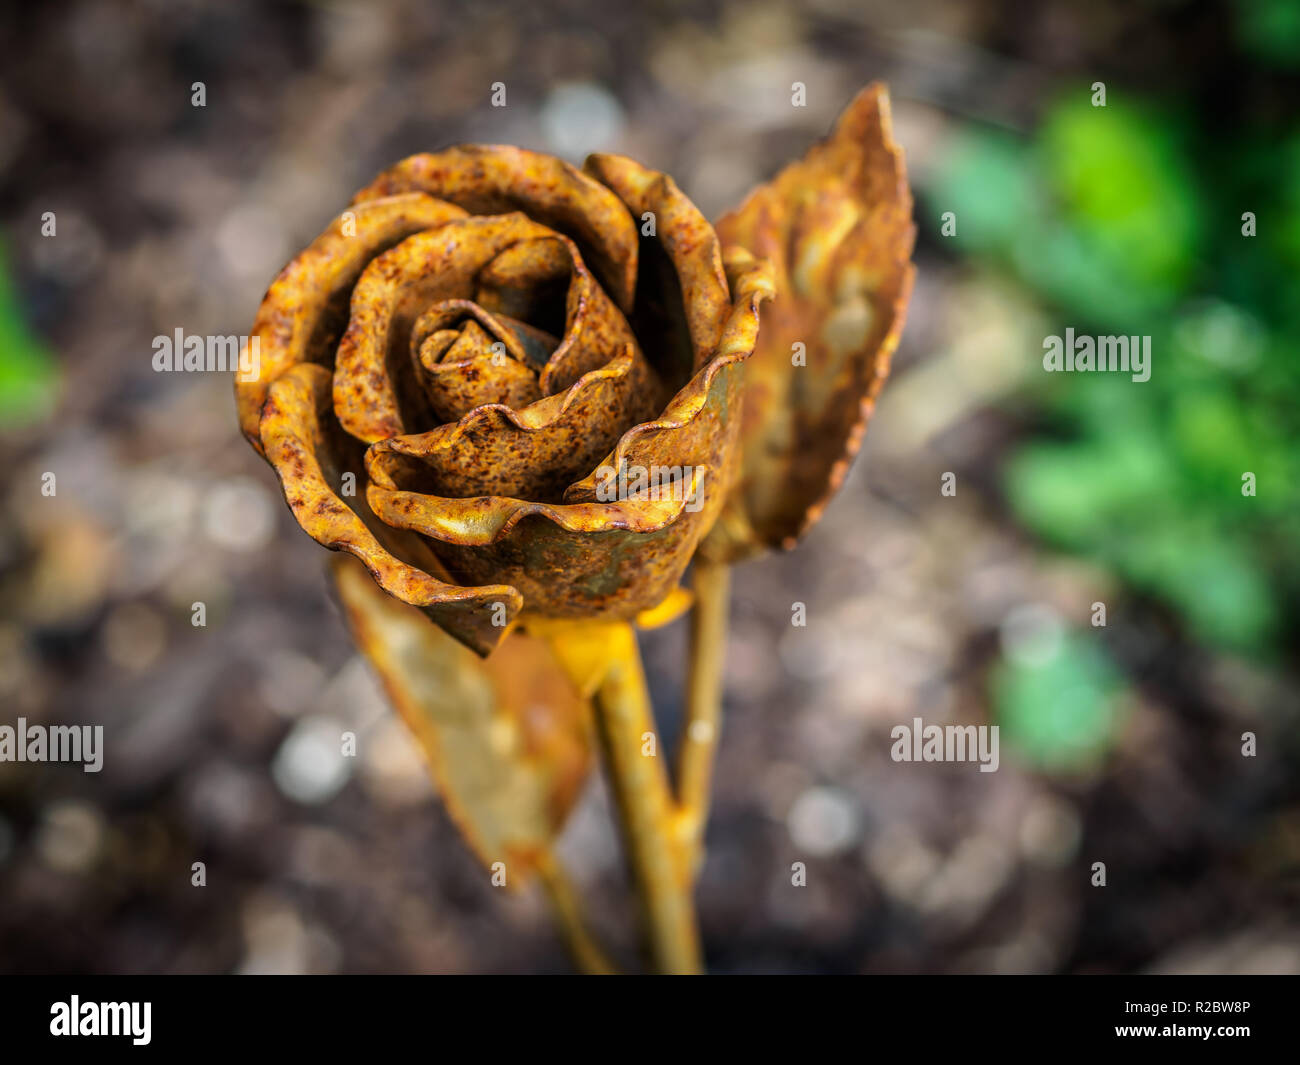 Rusty golden rose made of metal Stock Photo